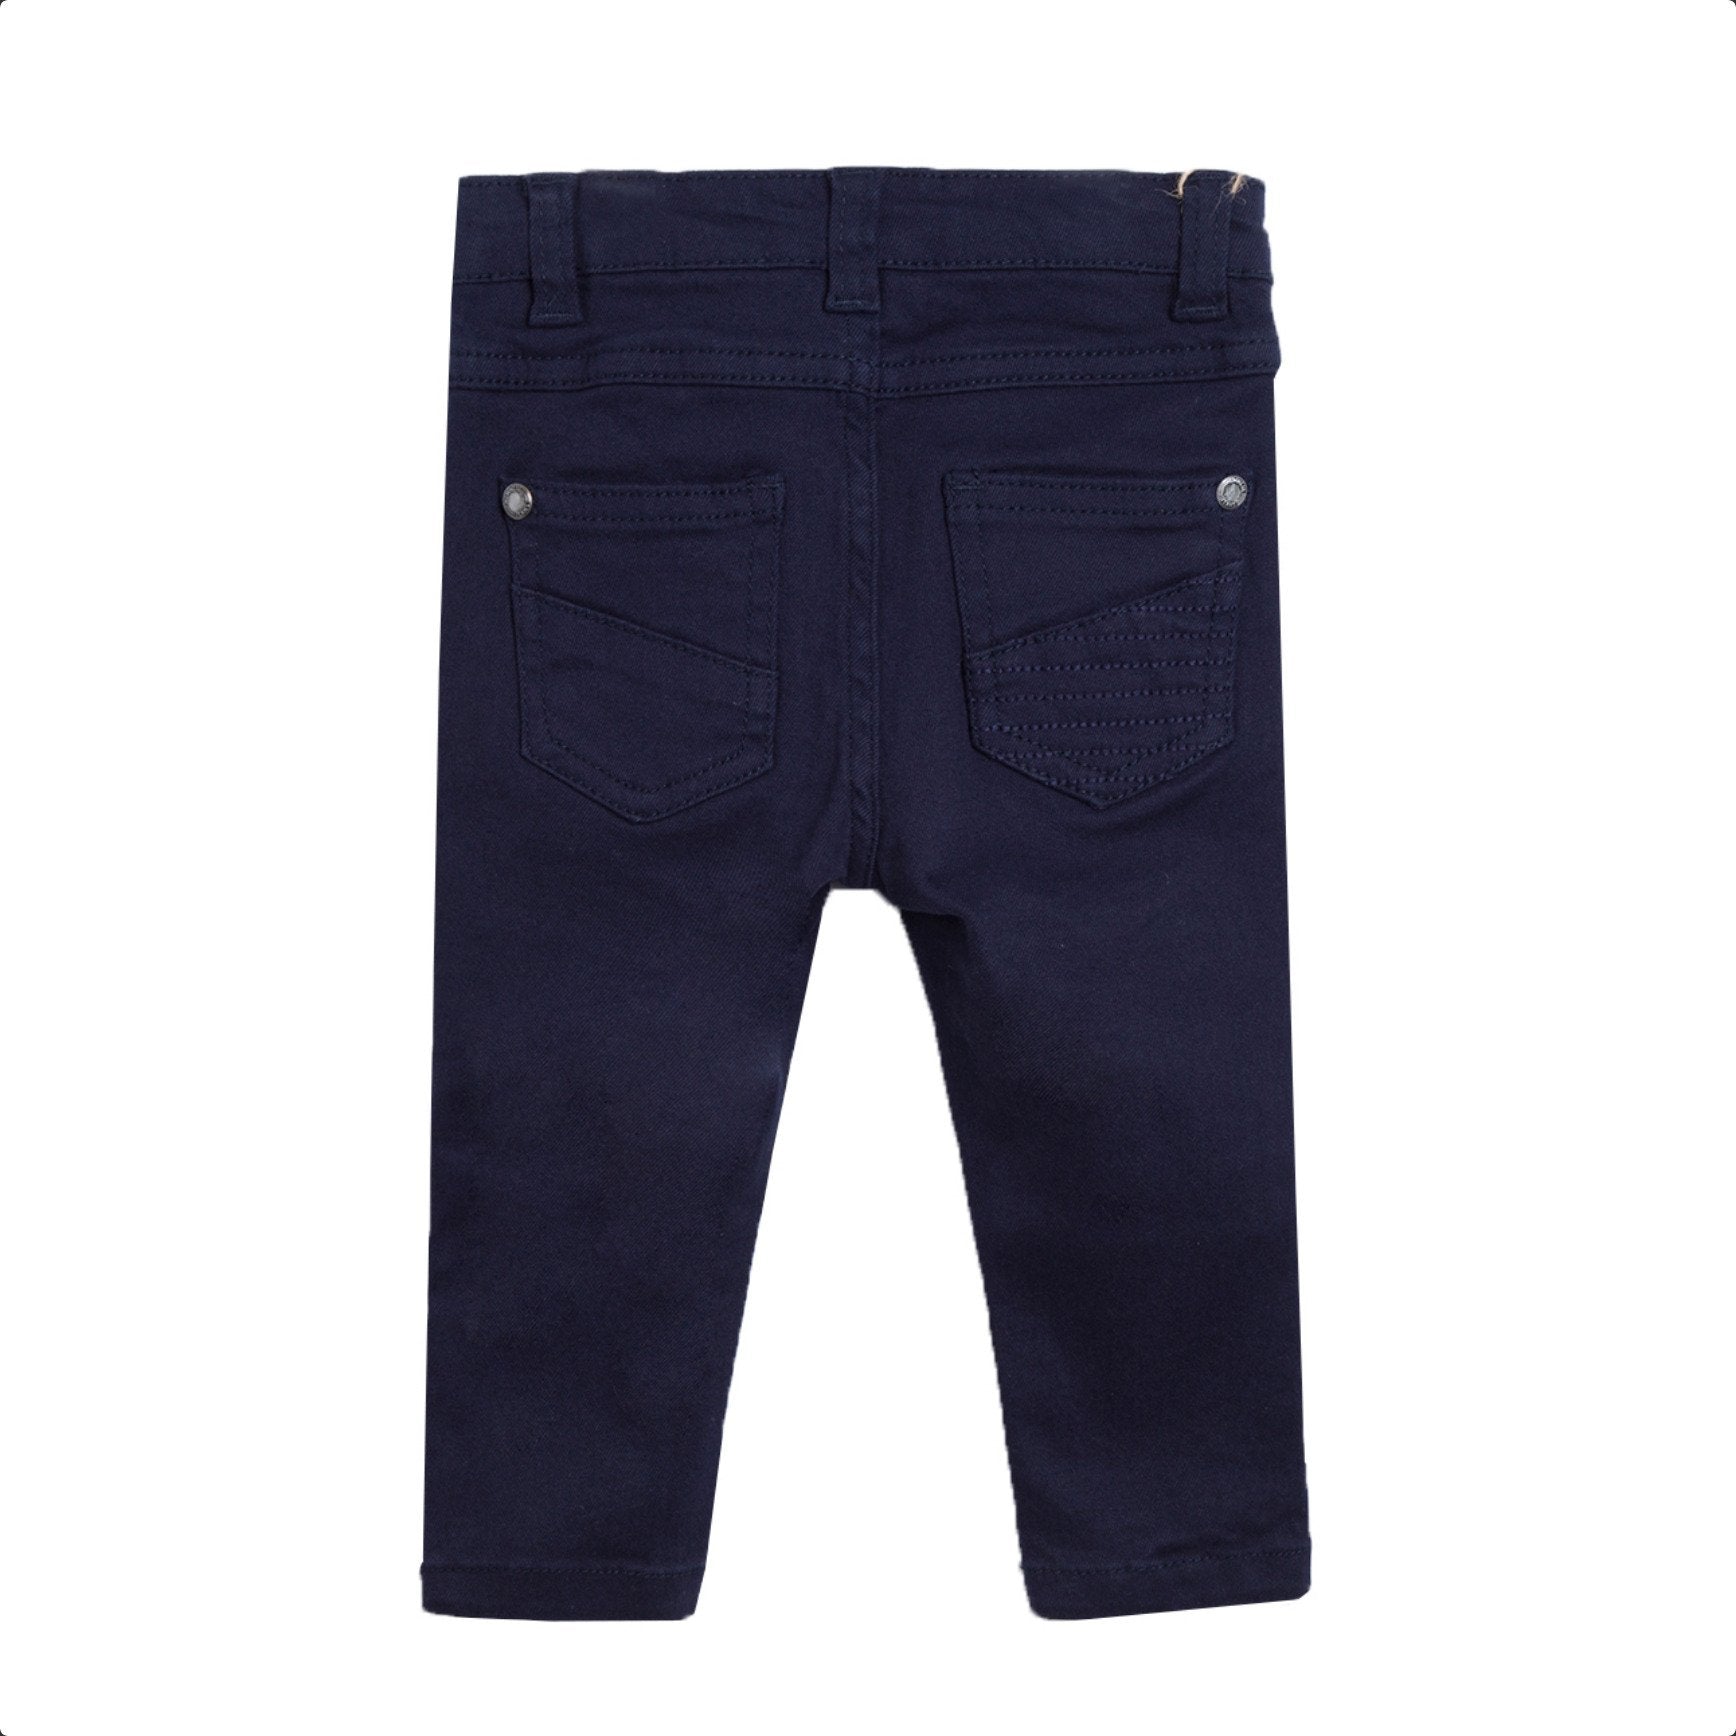 Dark Blue Slim Elasticated Baby Jeans - 6 to 9 months - Stylemykid.com